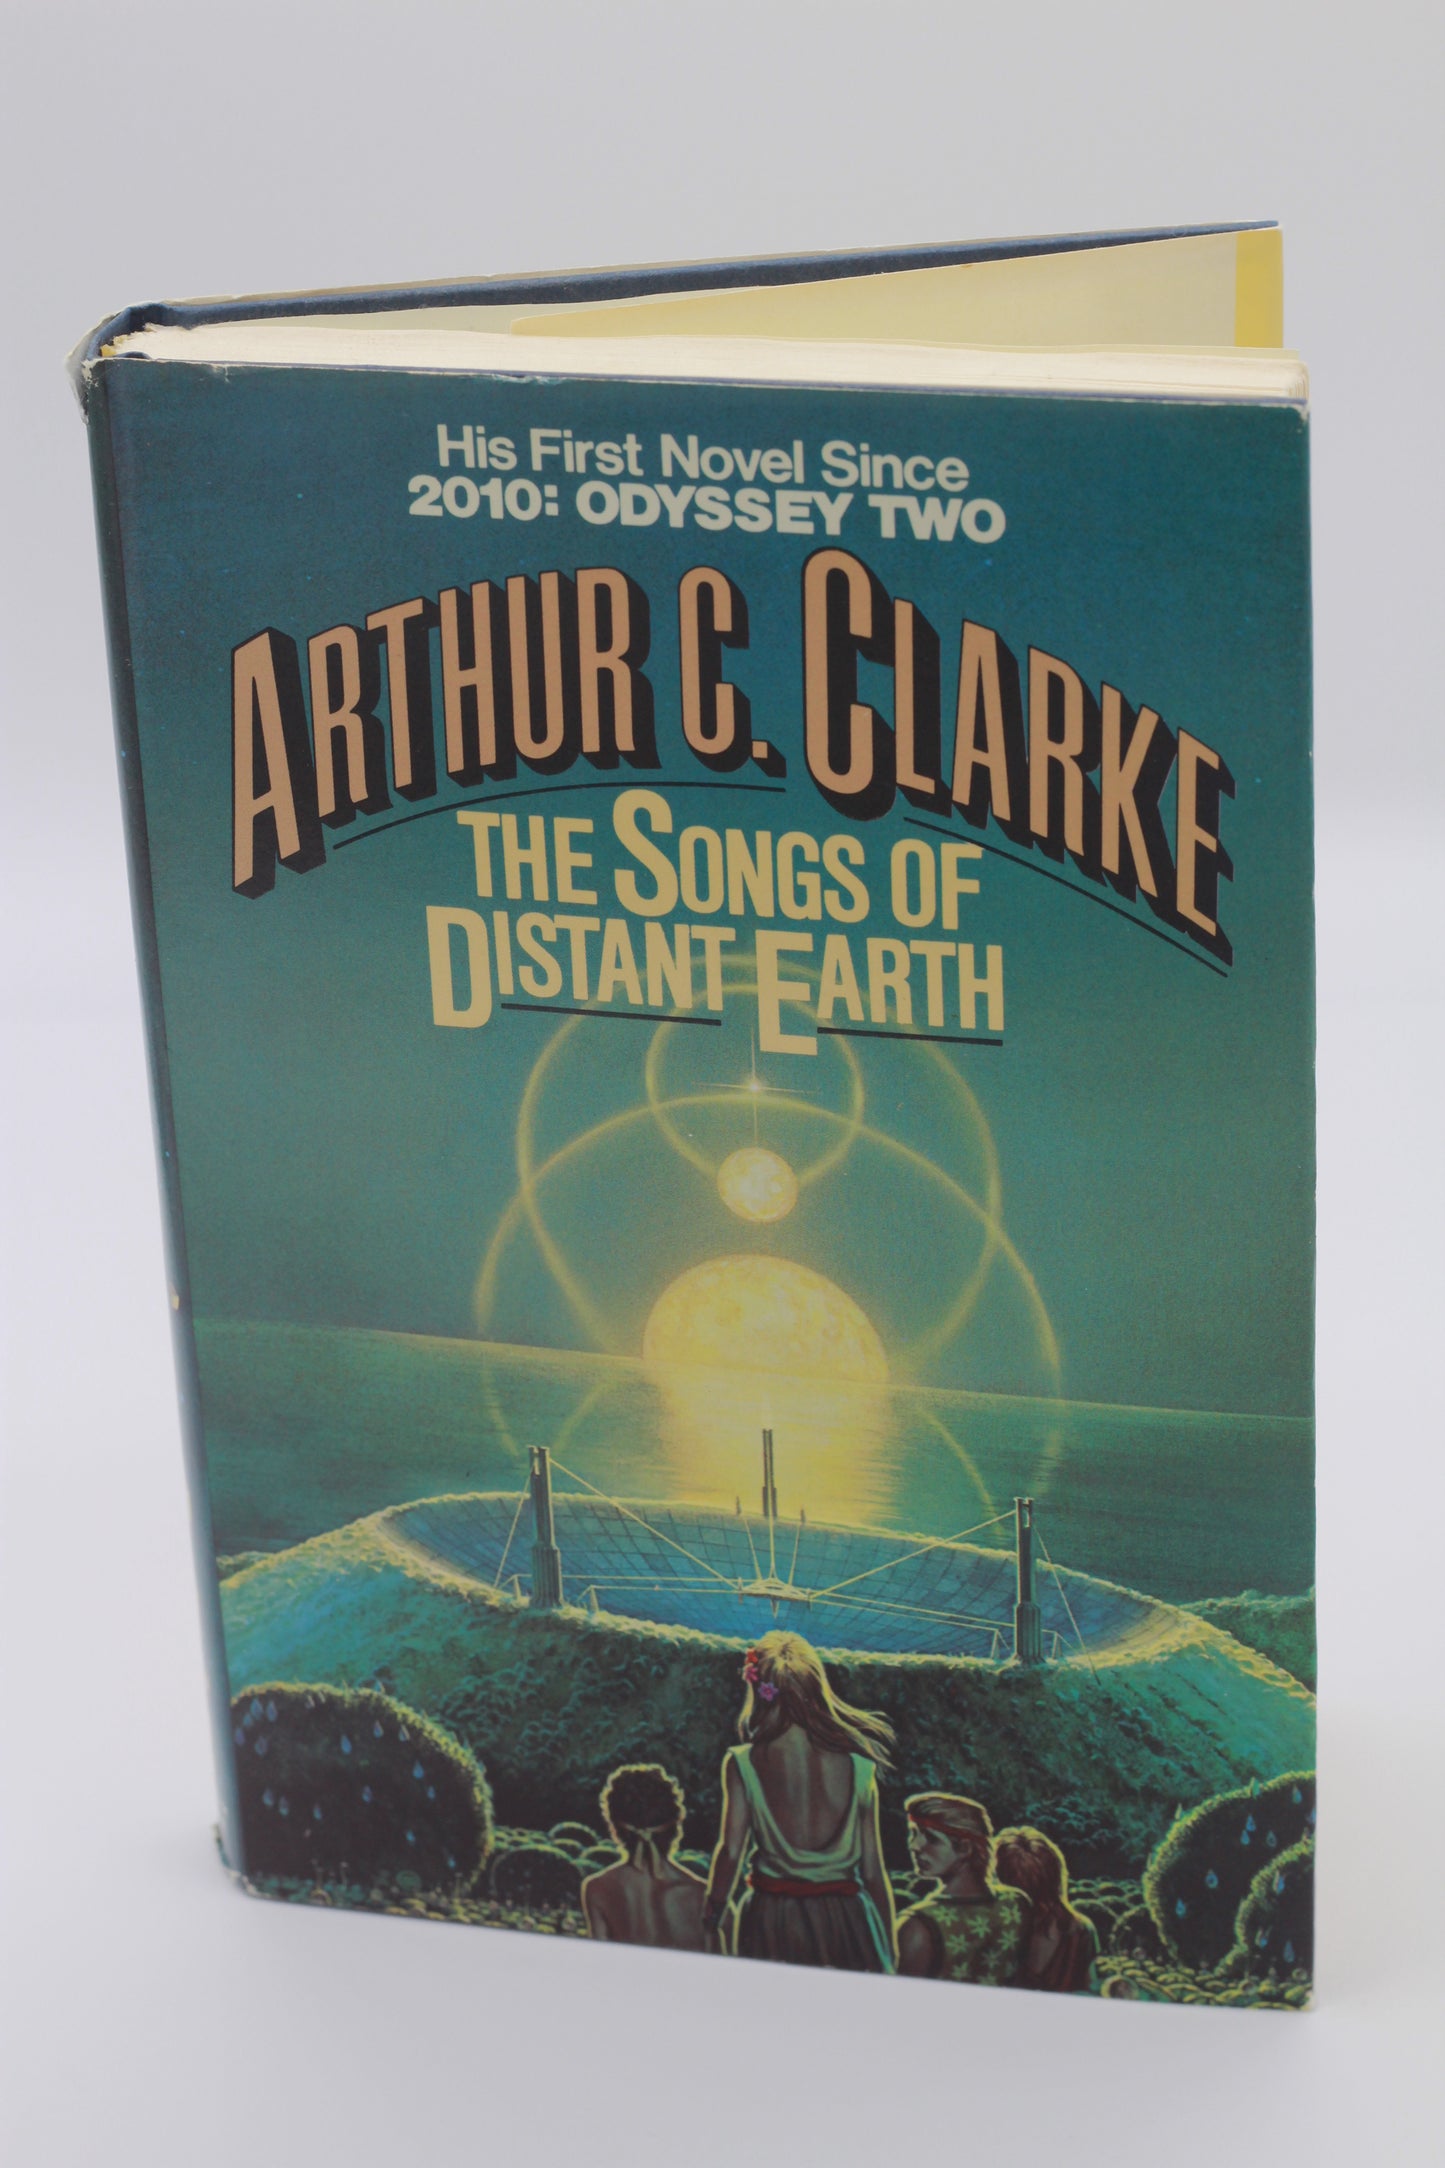 The Songs of Distant Earth - Arthur C. Clarke